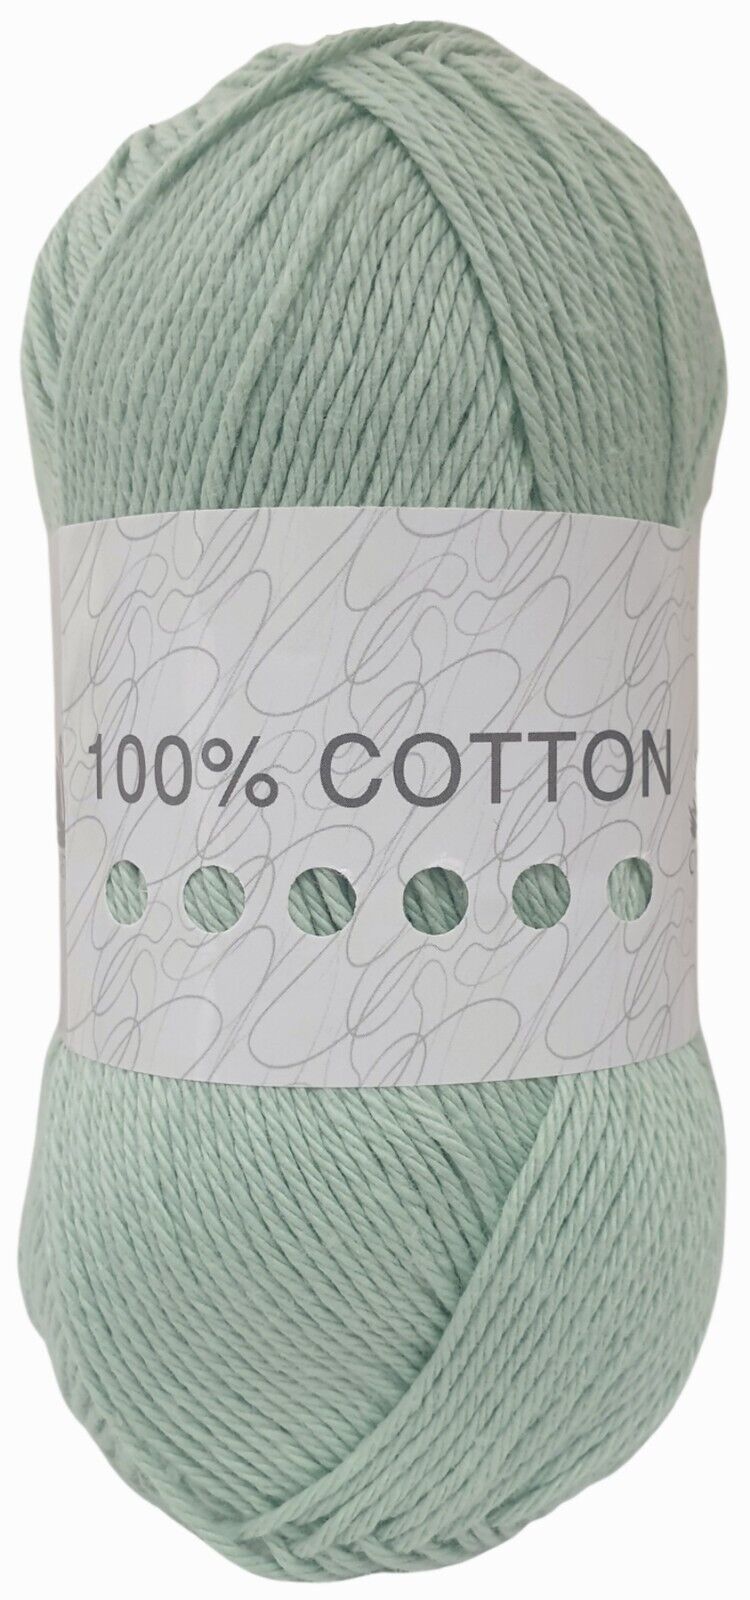 Cygnet 100% COTTON DK Knitting Yarn / Wool - 100g Double Knit Ball - Lemon Grass